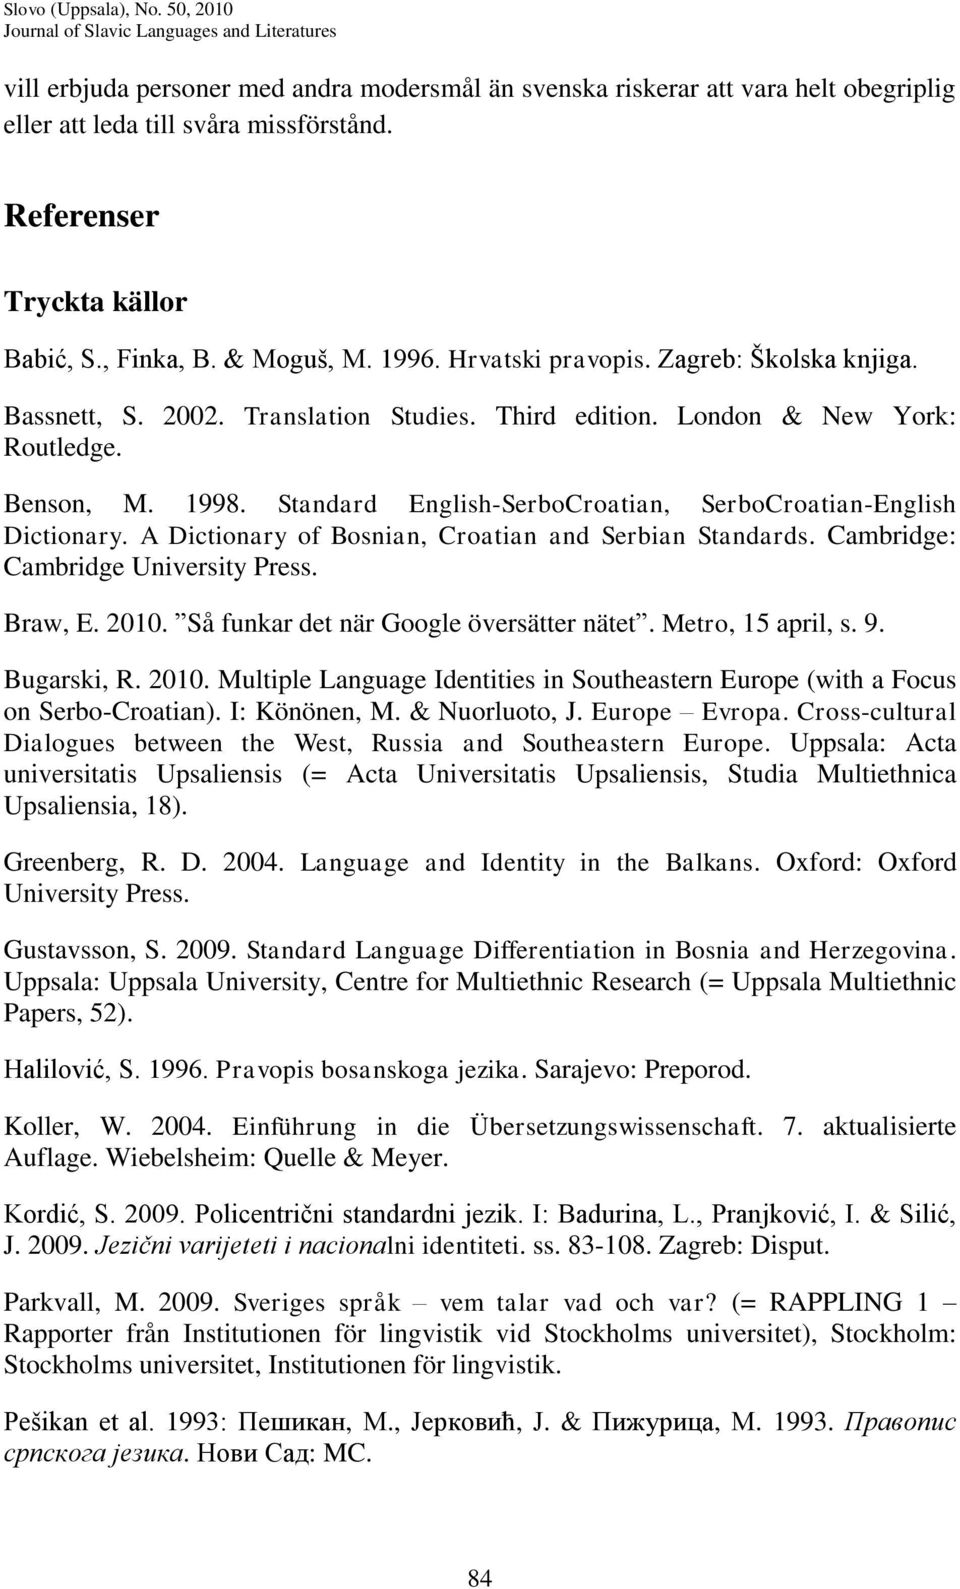 Standard English-SerboCroatian, SerboCroatian-English Dictionary. A Dictionary of Bosnian, Croatian and Serbian Standards. Cambridge: Cambridge University Press. Braw, E. 2010.